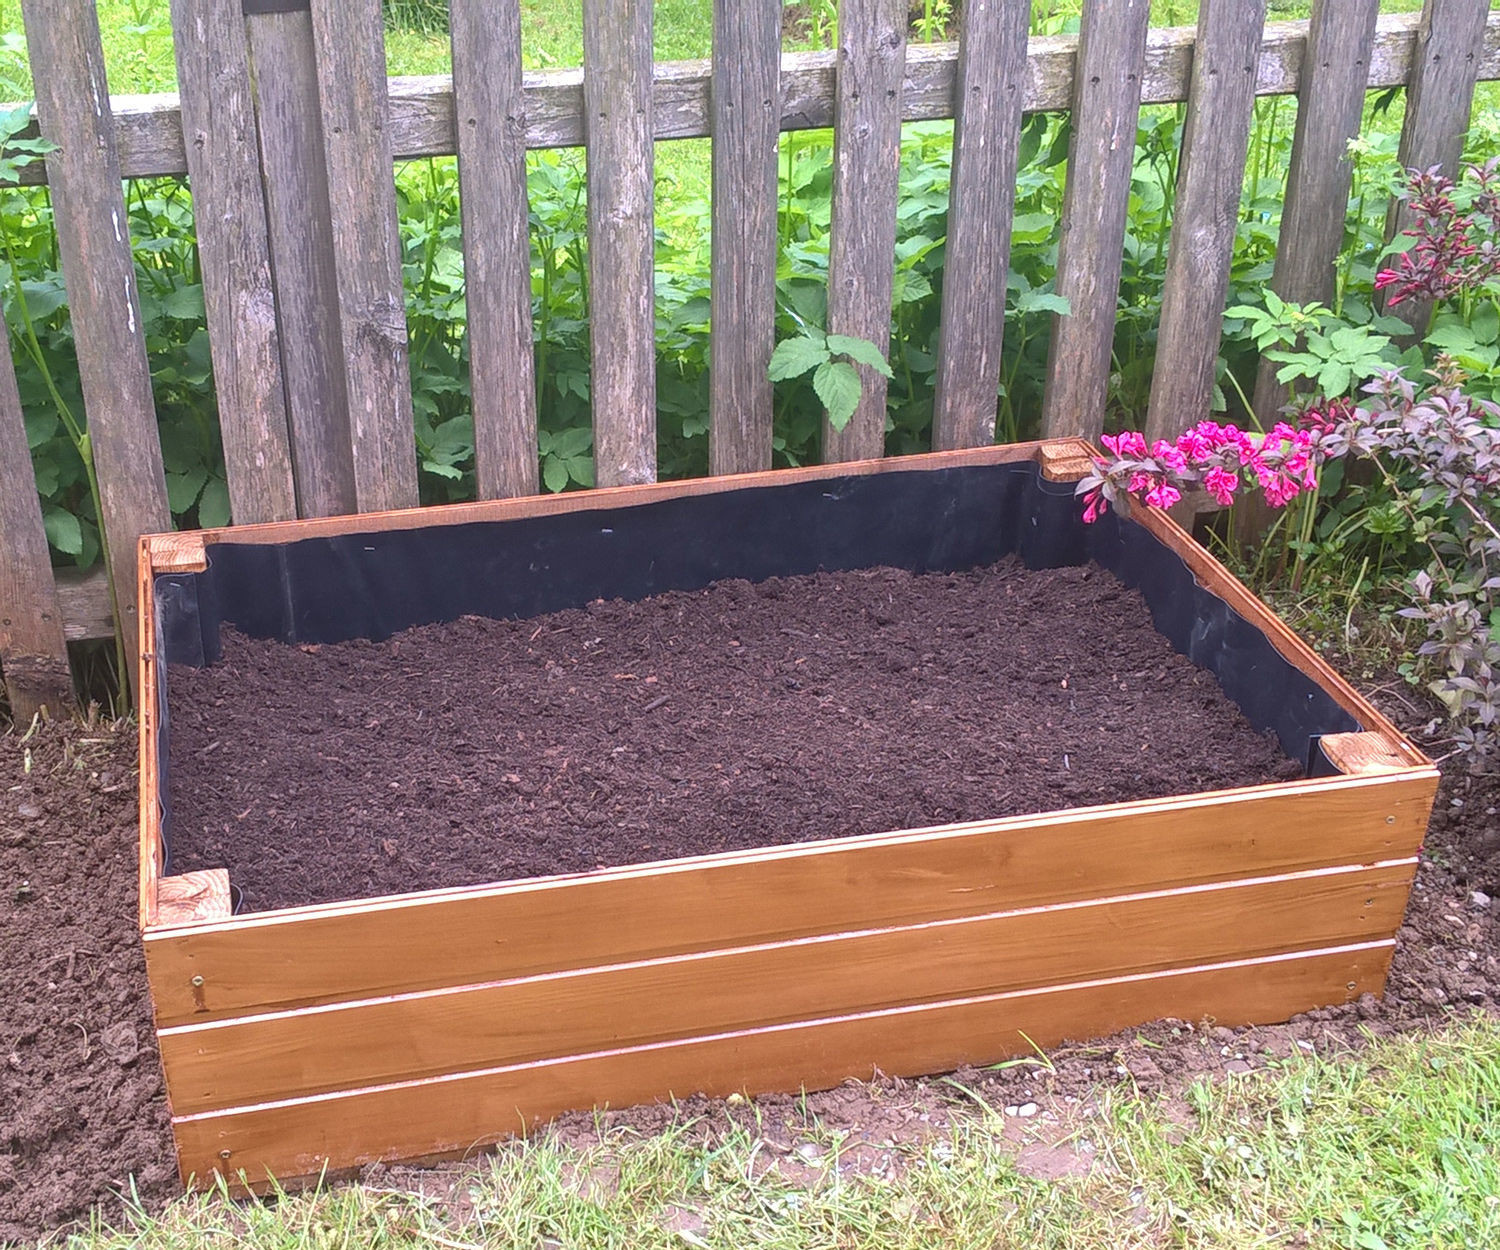 Best ideas about Raised Garden Planter
. Save or Pin Wooden Raised Bed Garden Planter 5 Now.